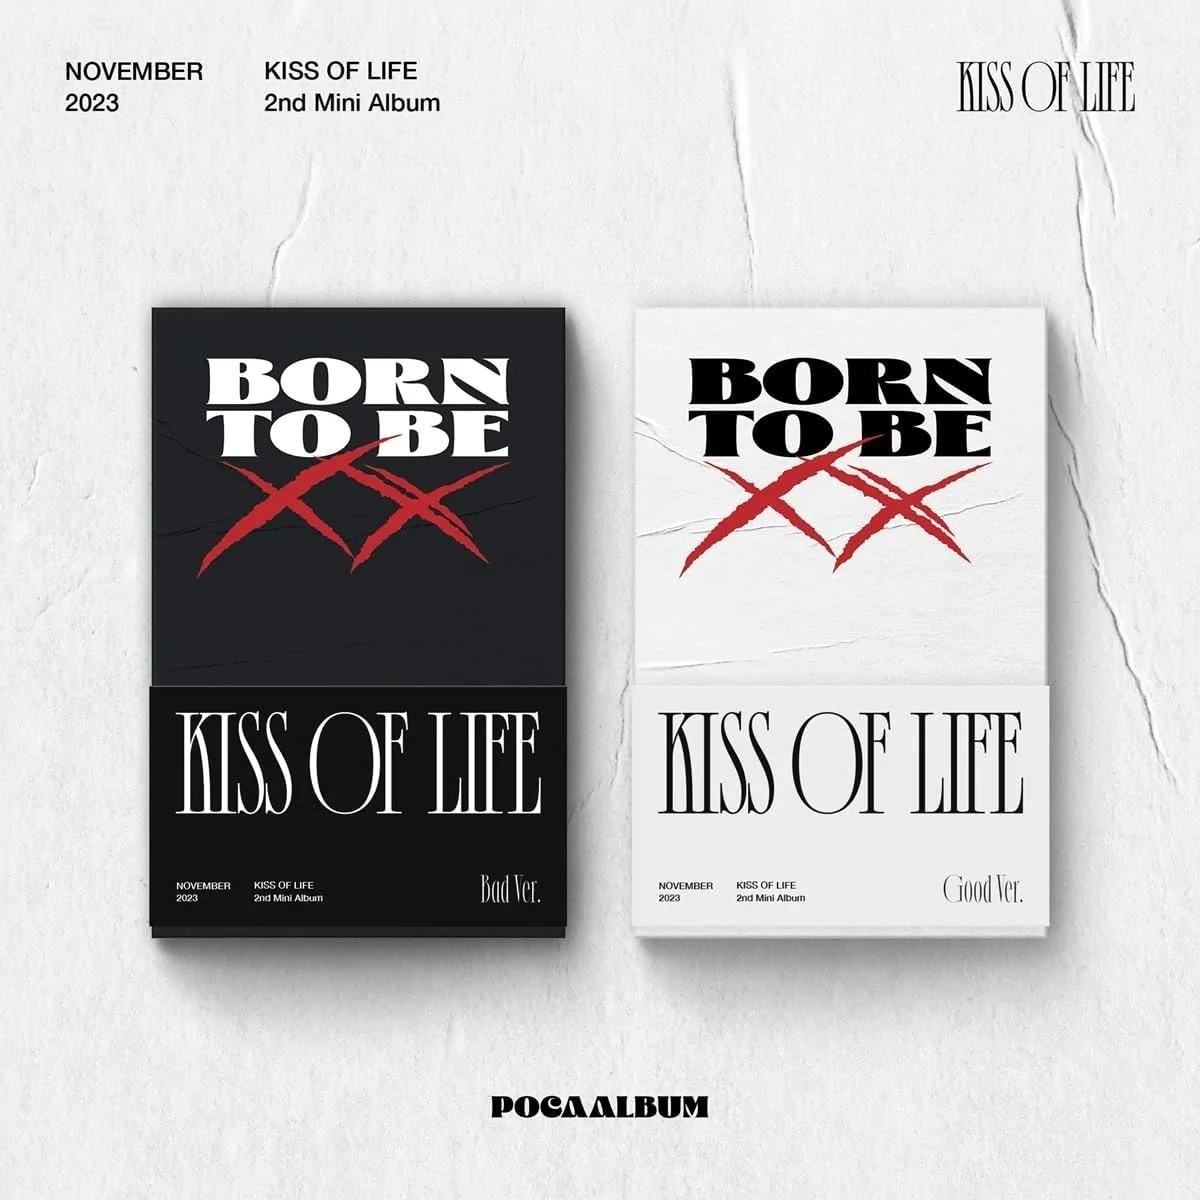 KISS OF LIFE - Born to be XX (Good Version) (POCA) (2nd Mini Album) 